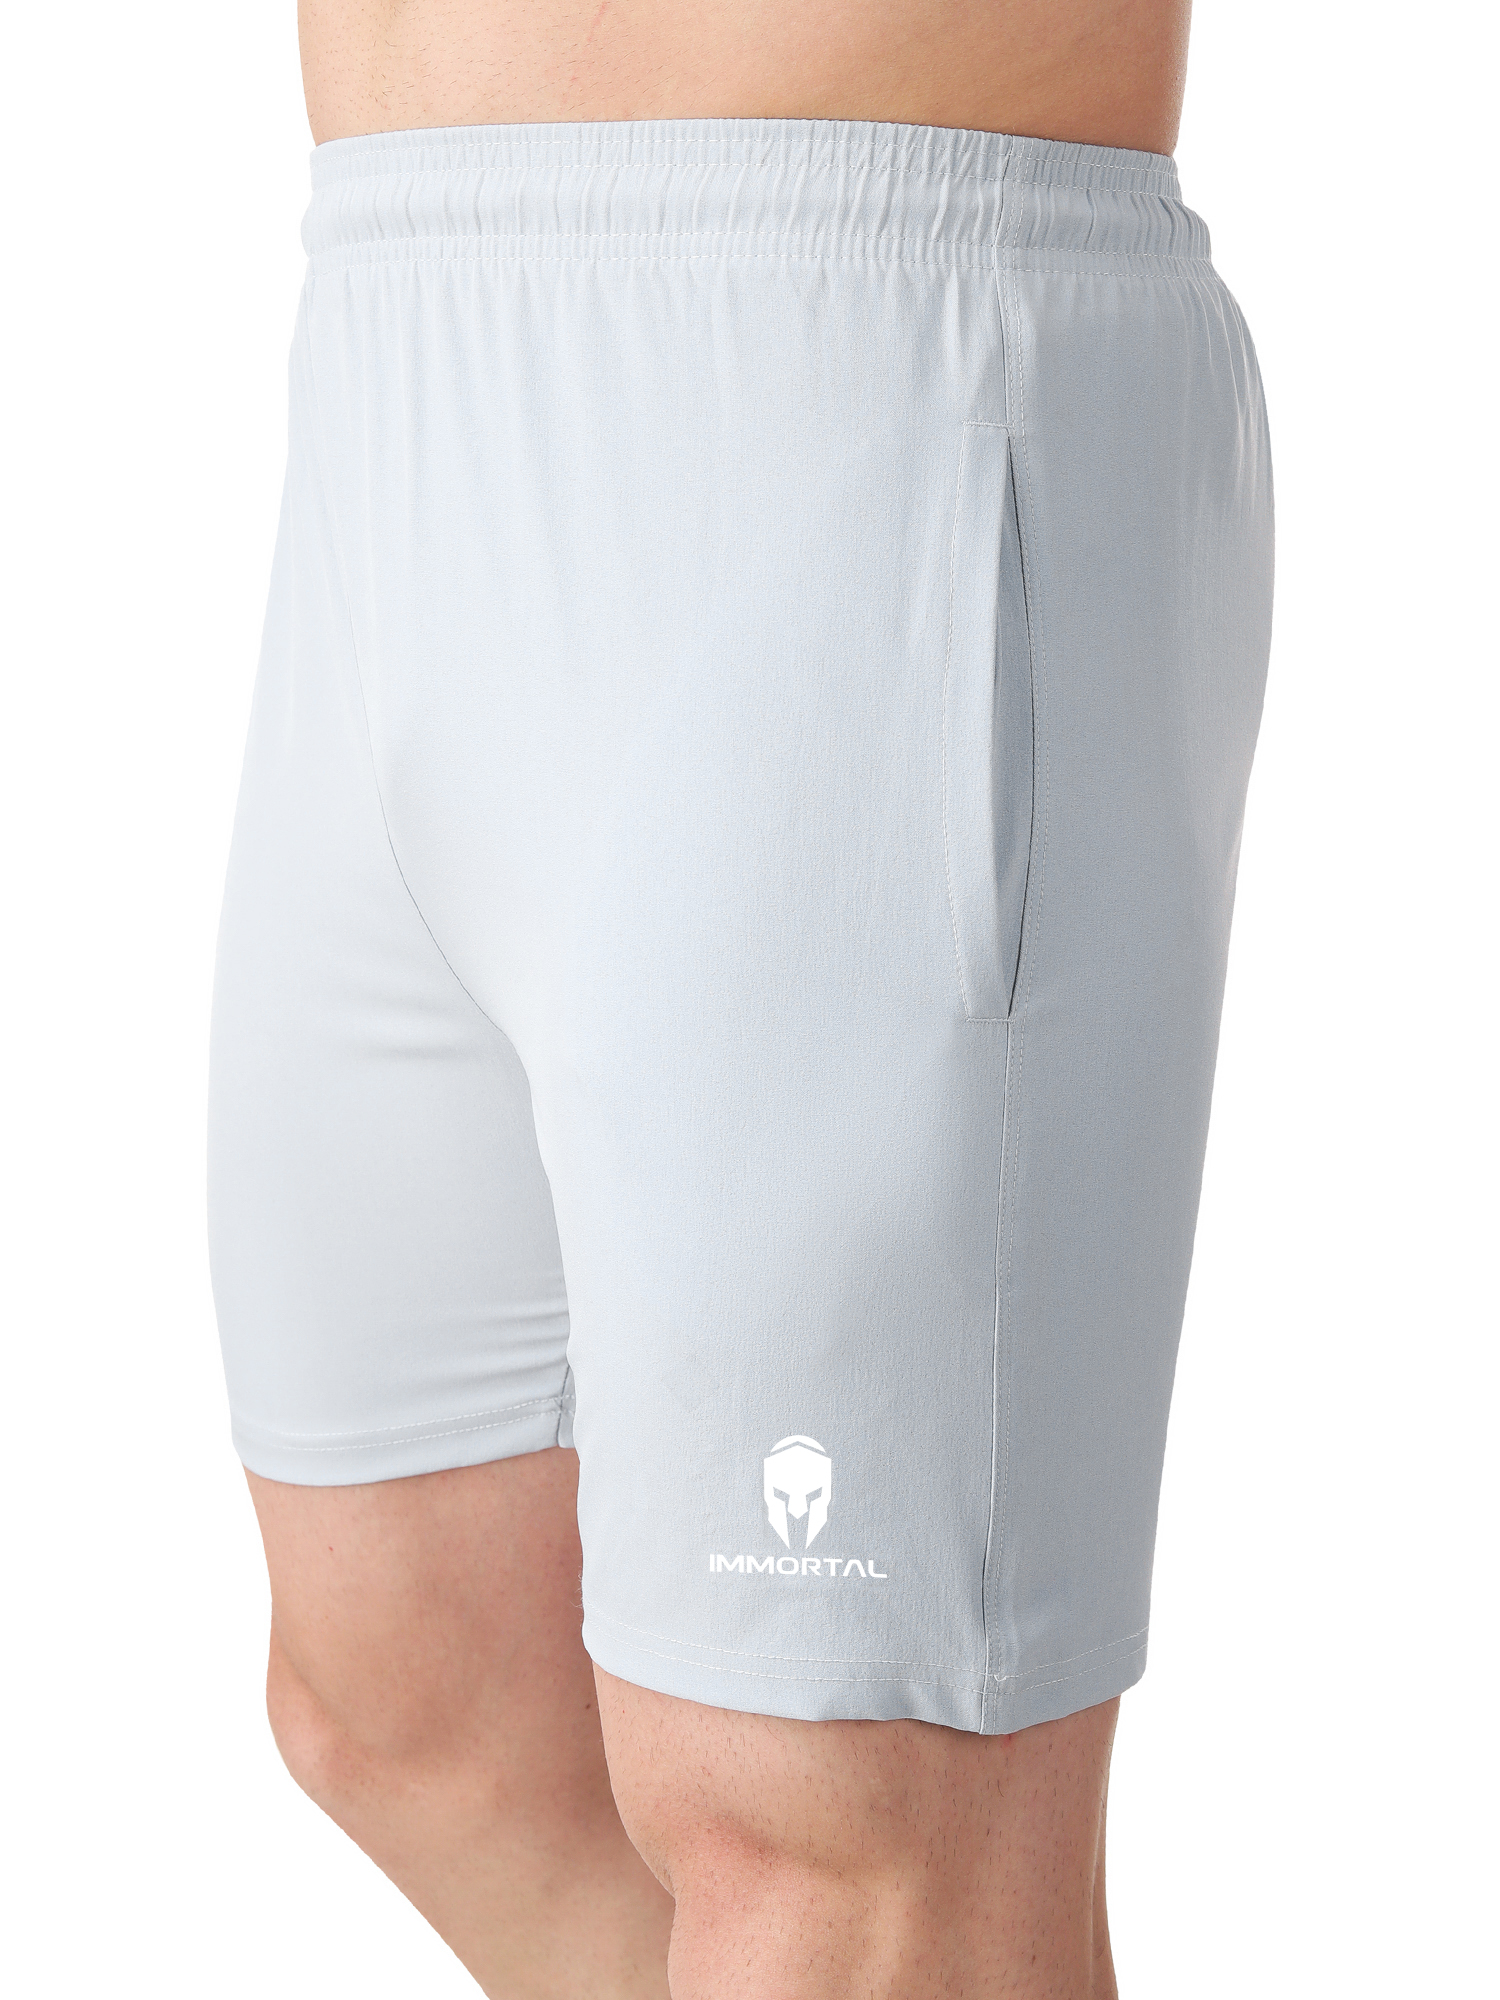 Immortal Light Grey Shorts For Small waist - Immortal Wear